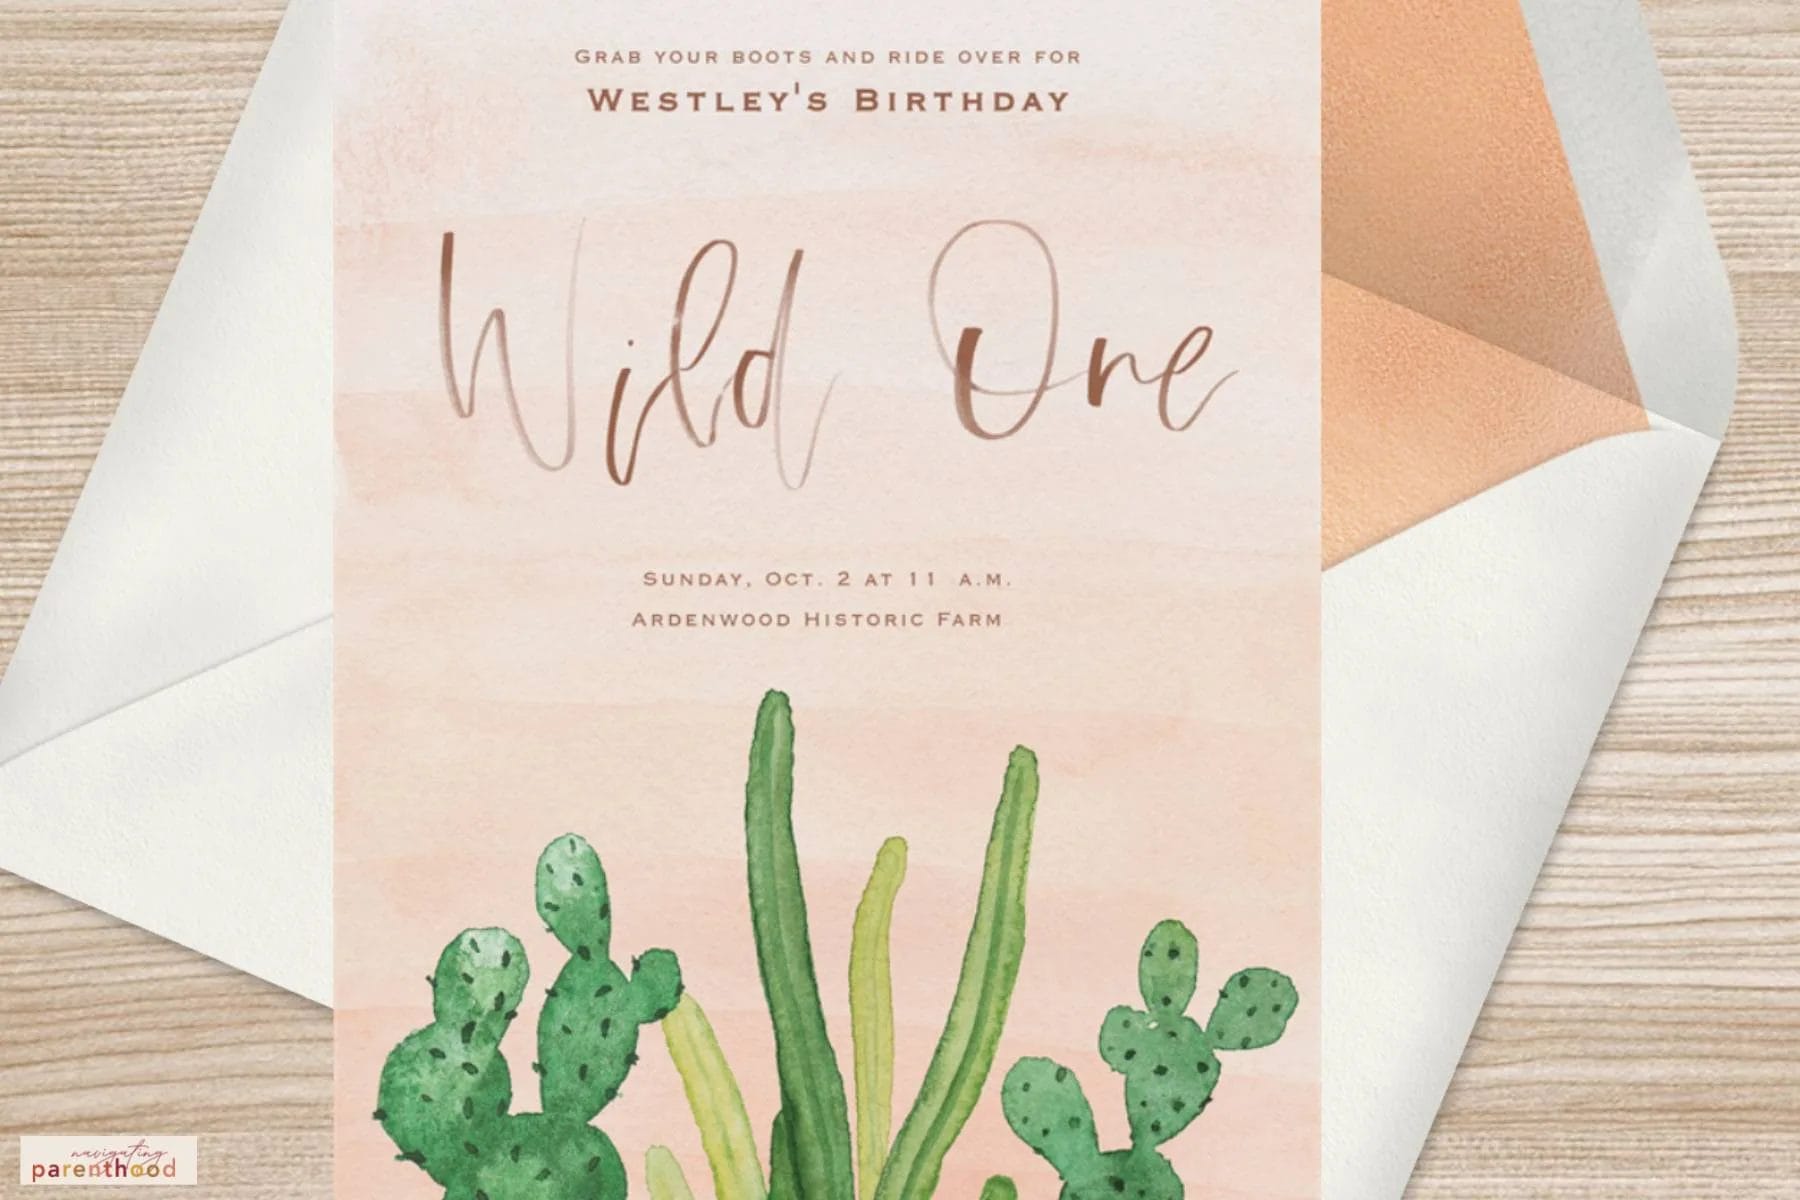 Wild West first birthday party invites